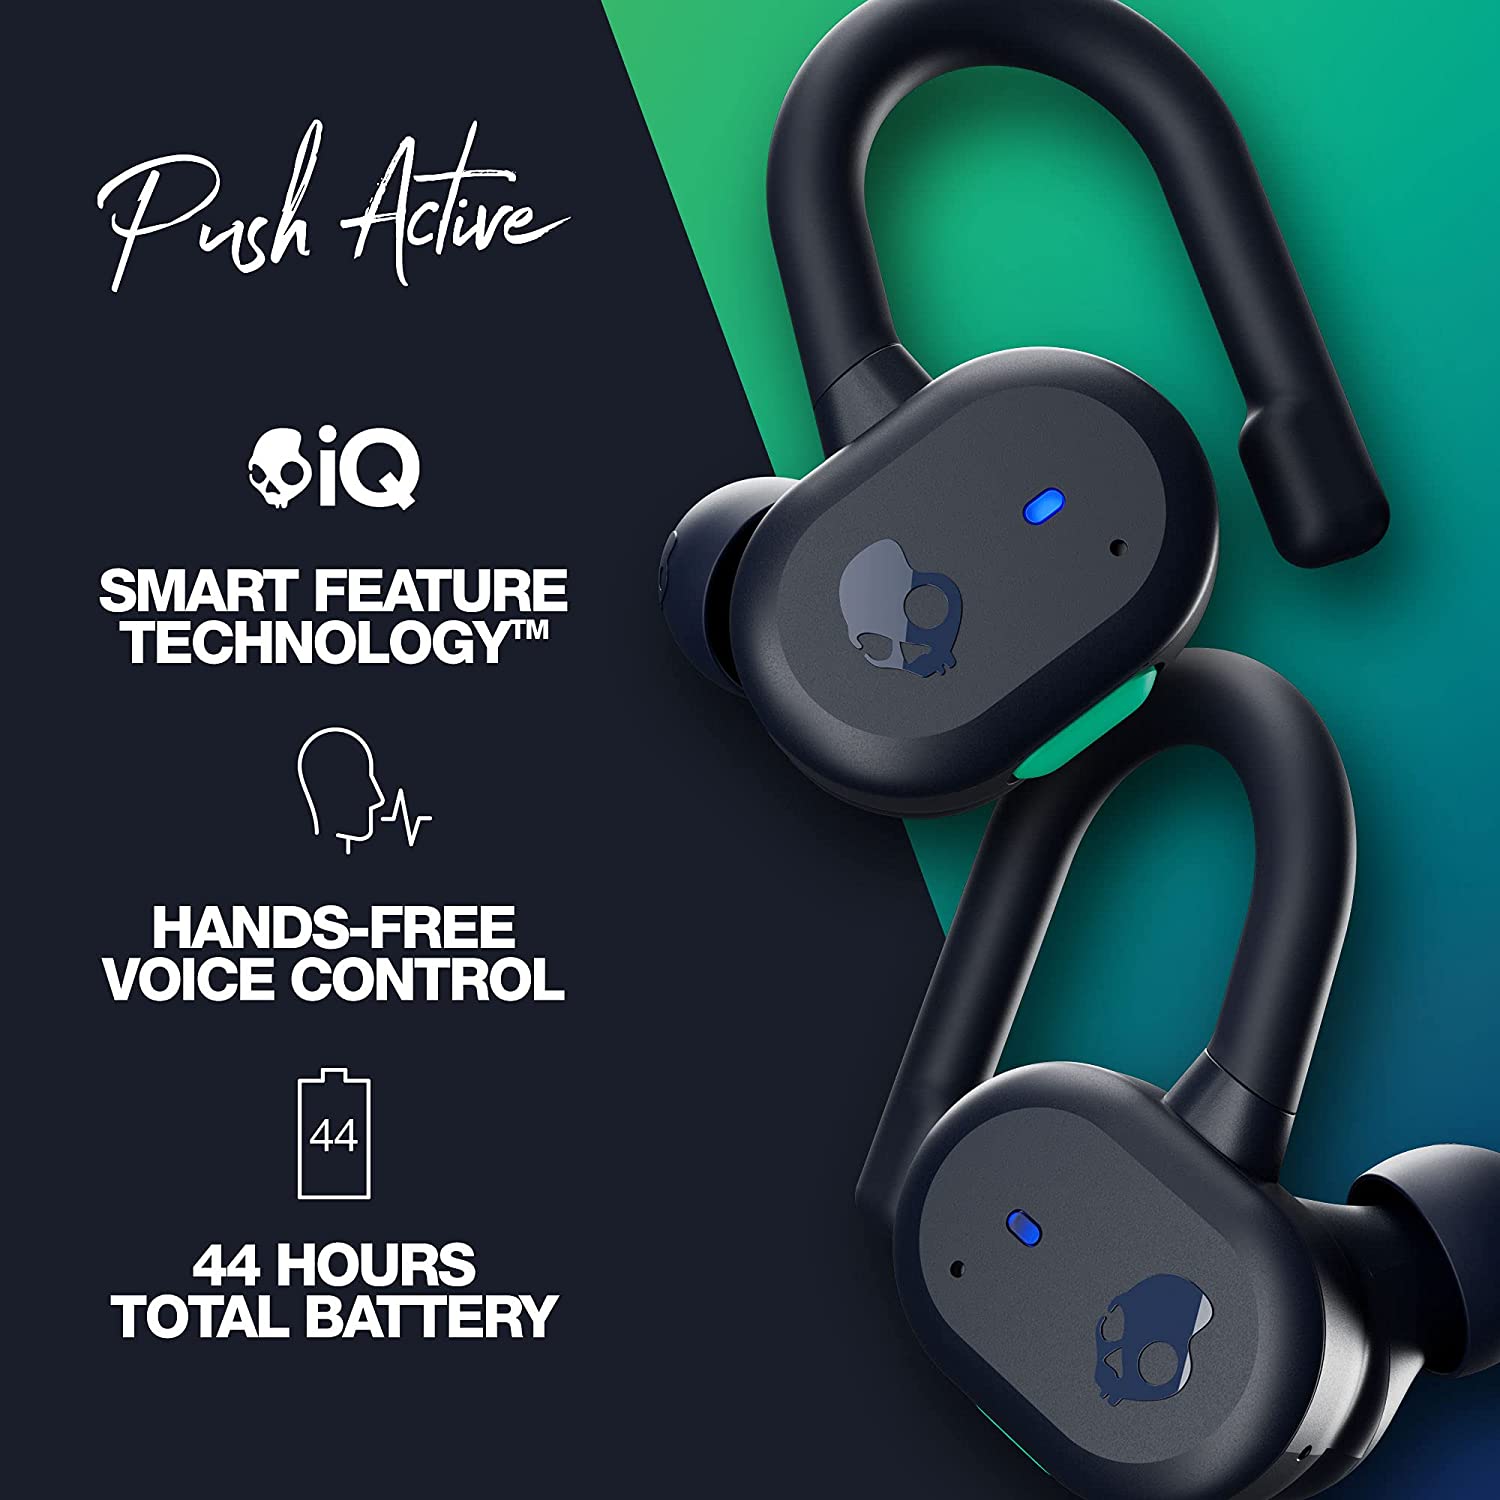 Audifonos Skullcandy Push Active: los primeros True Wireless con la tecnologia Skull-iQ Smart Feature